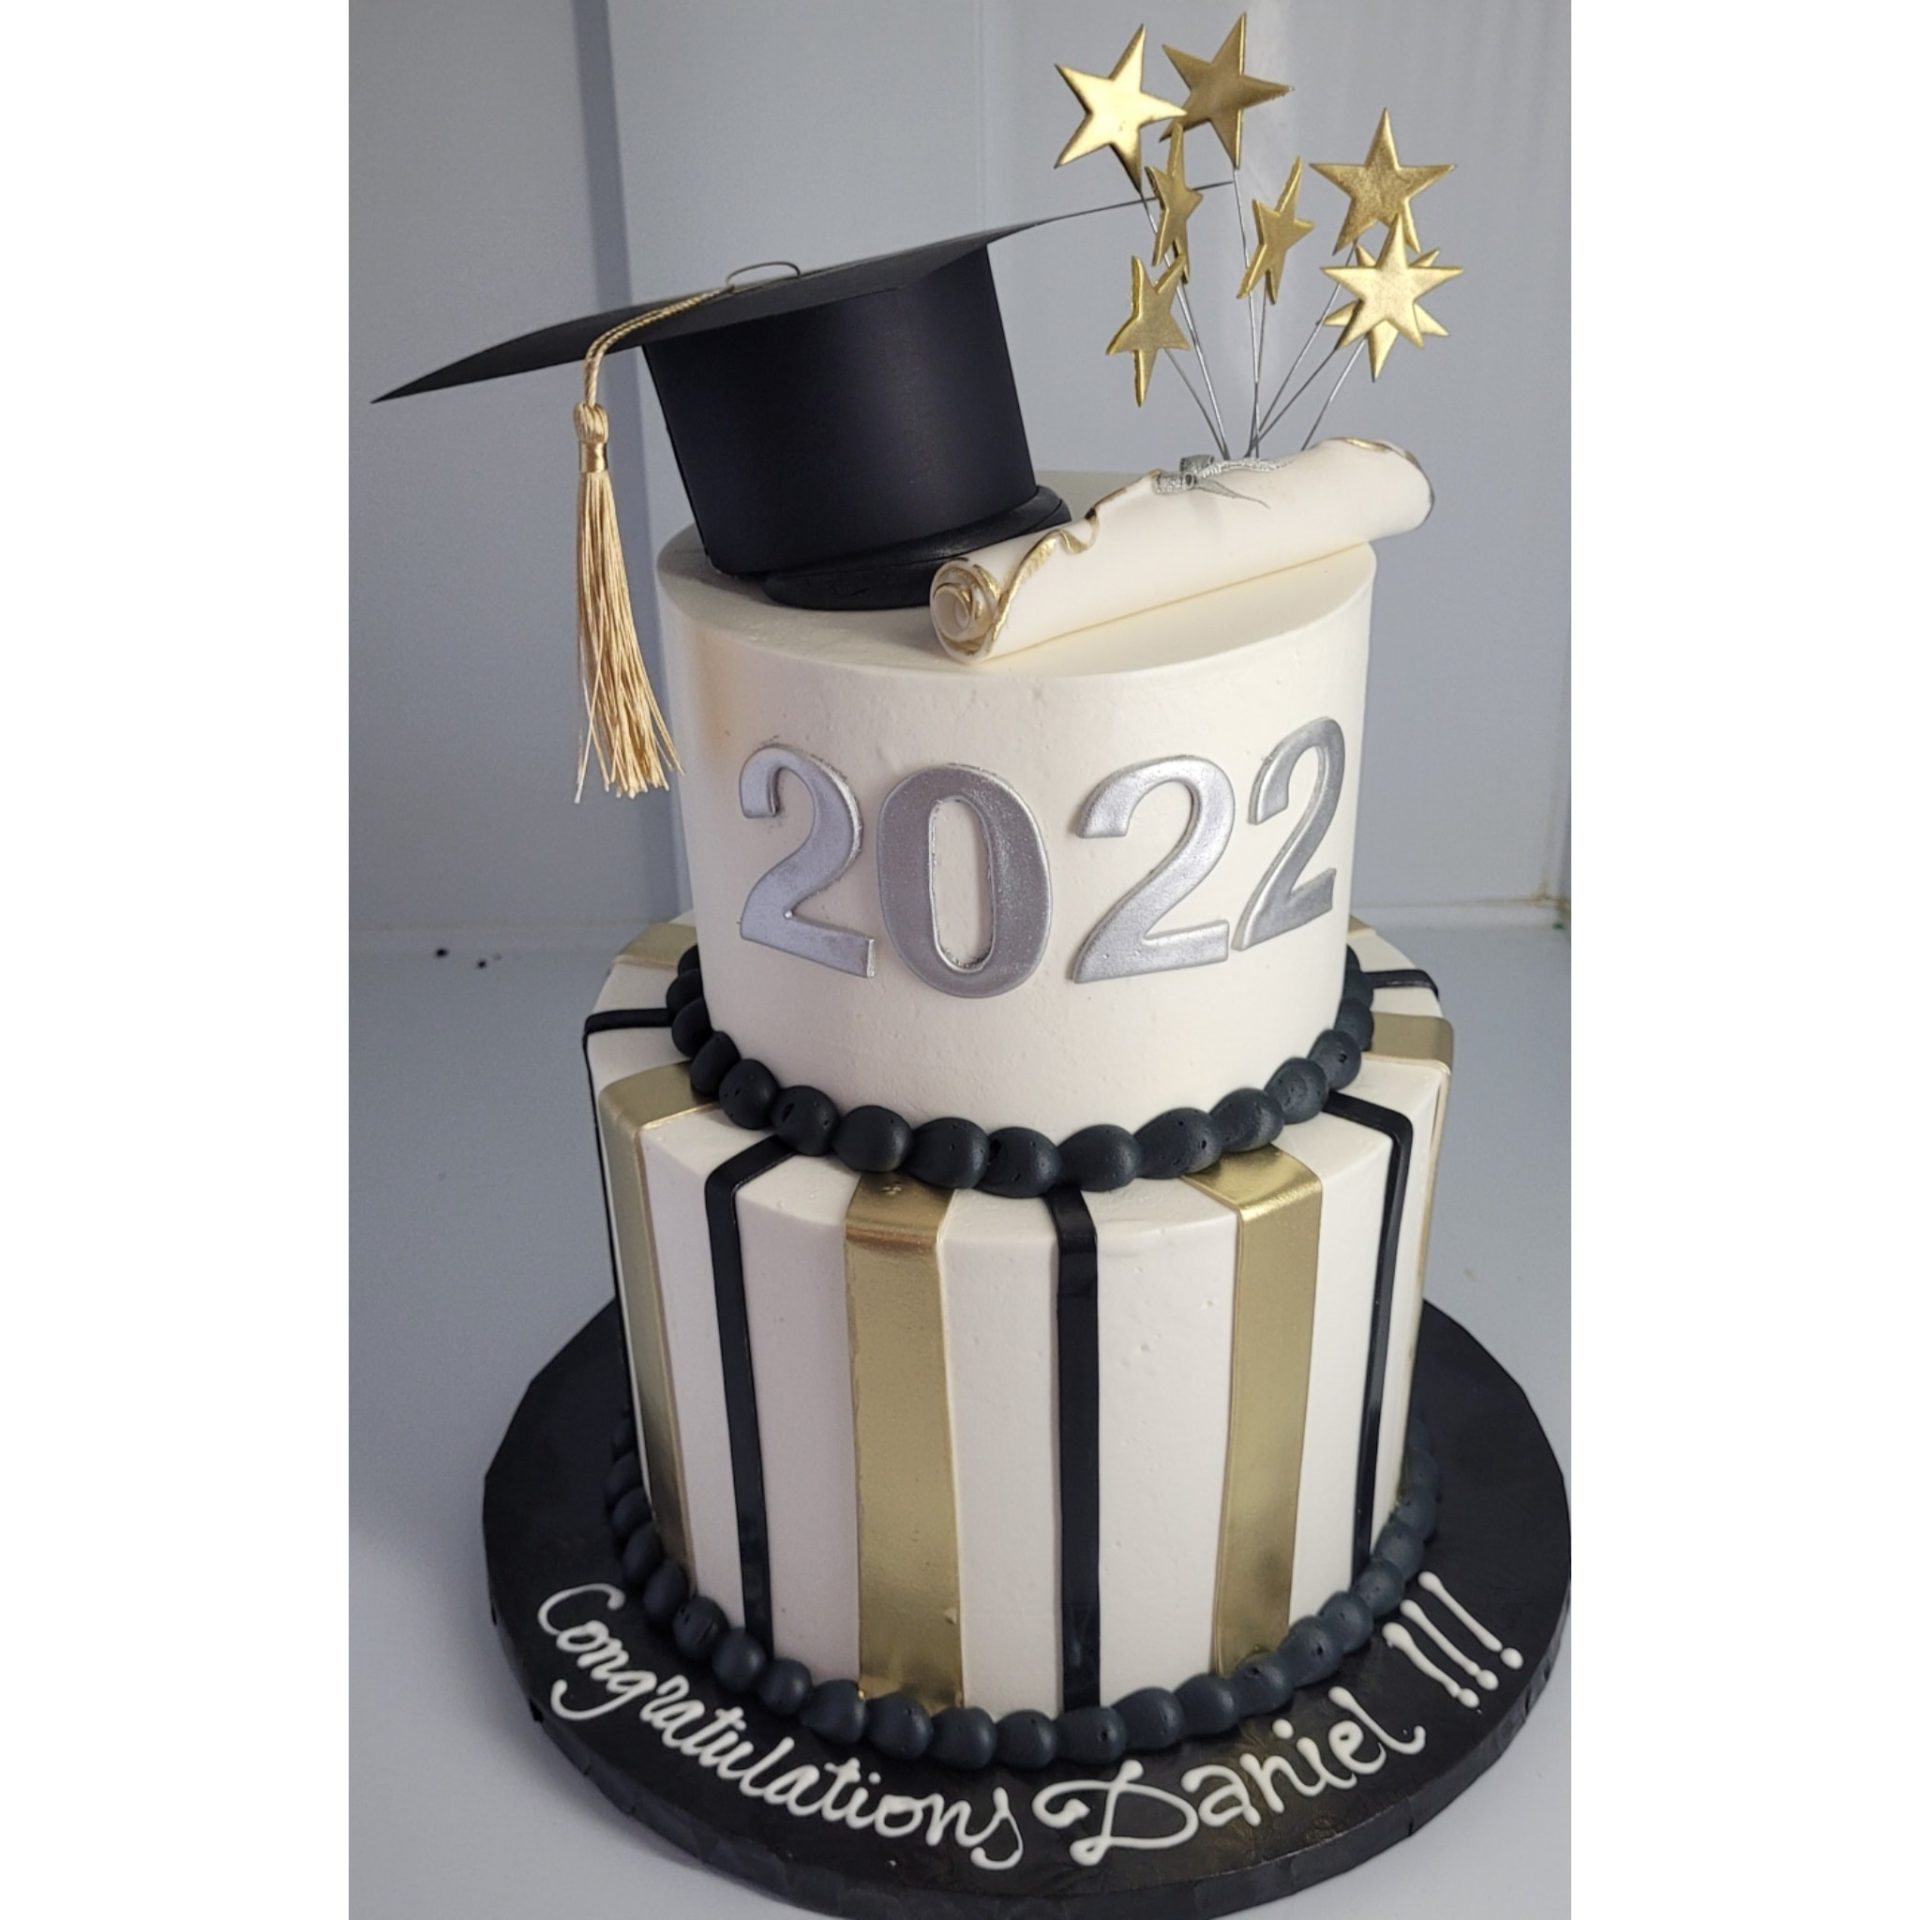 Graduation cake - gold, black and white